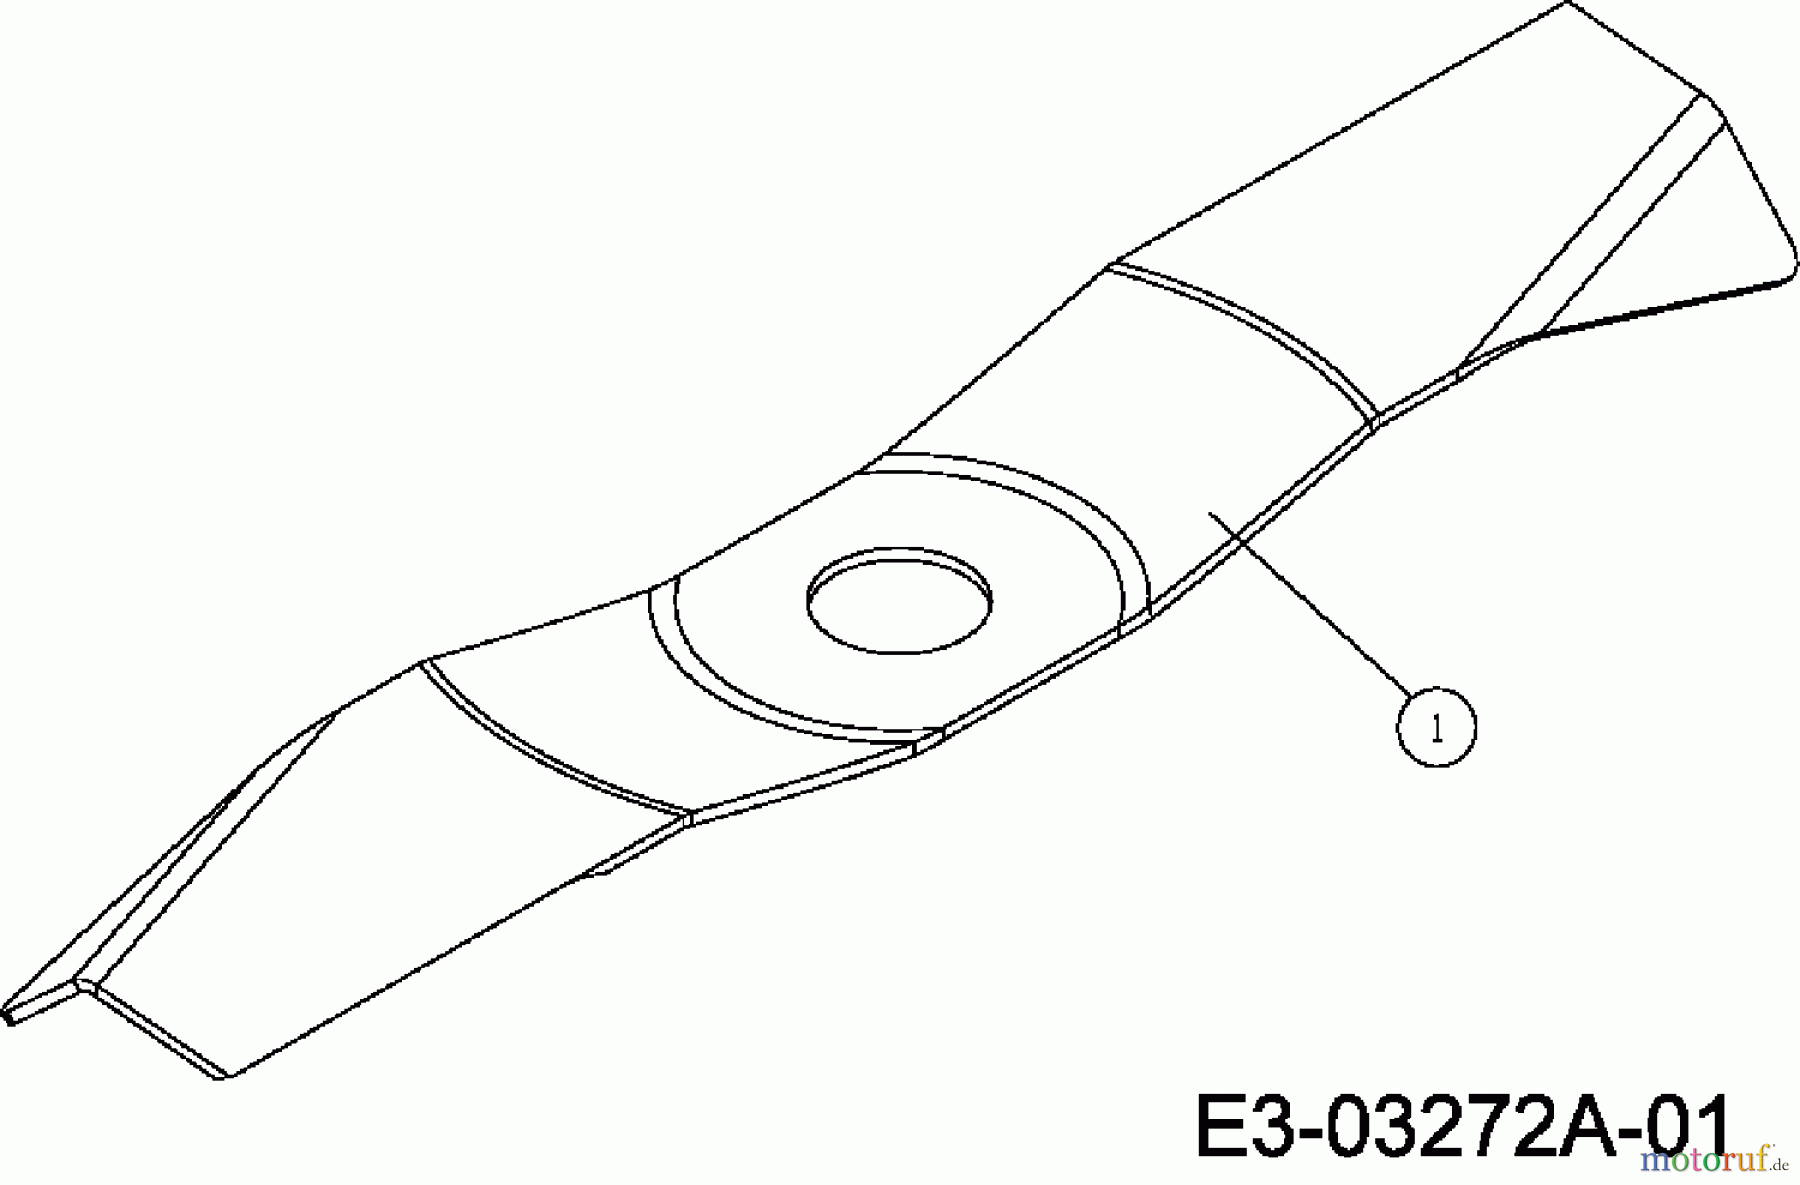  Terradena Elektromäher EM 1400 18C-N4S-651  (2007) Messer